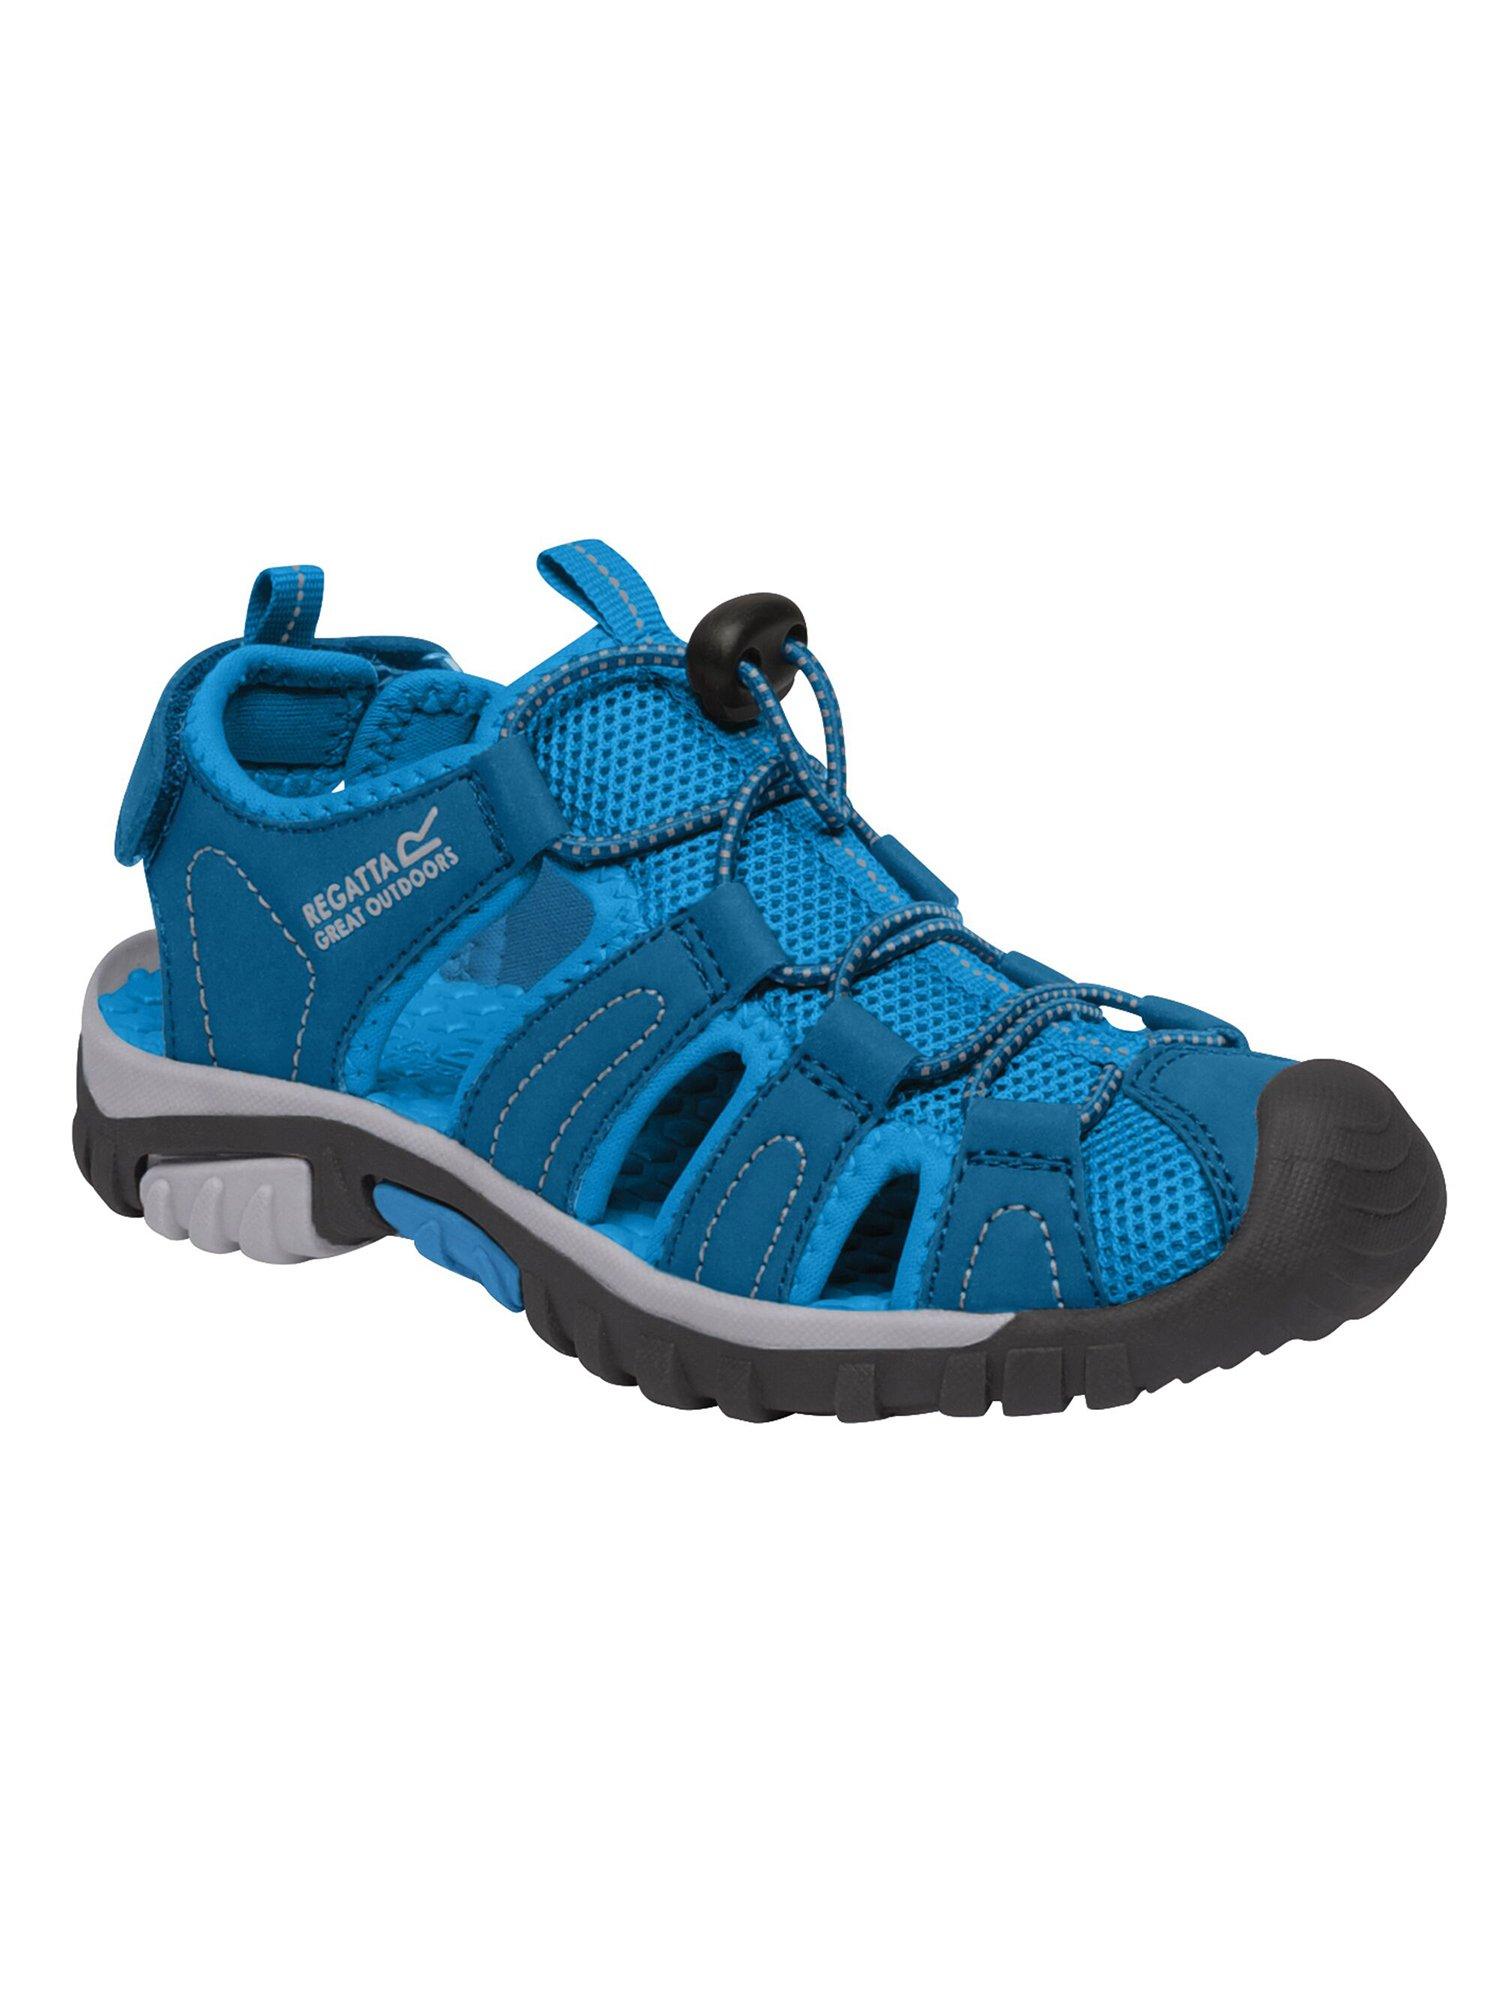 ’Westshore Junior’ Breathable Walking Sandals